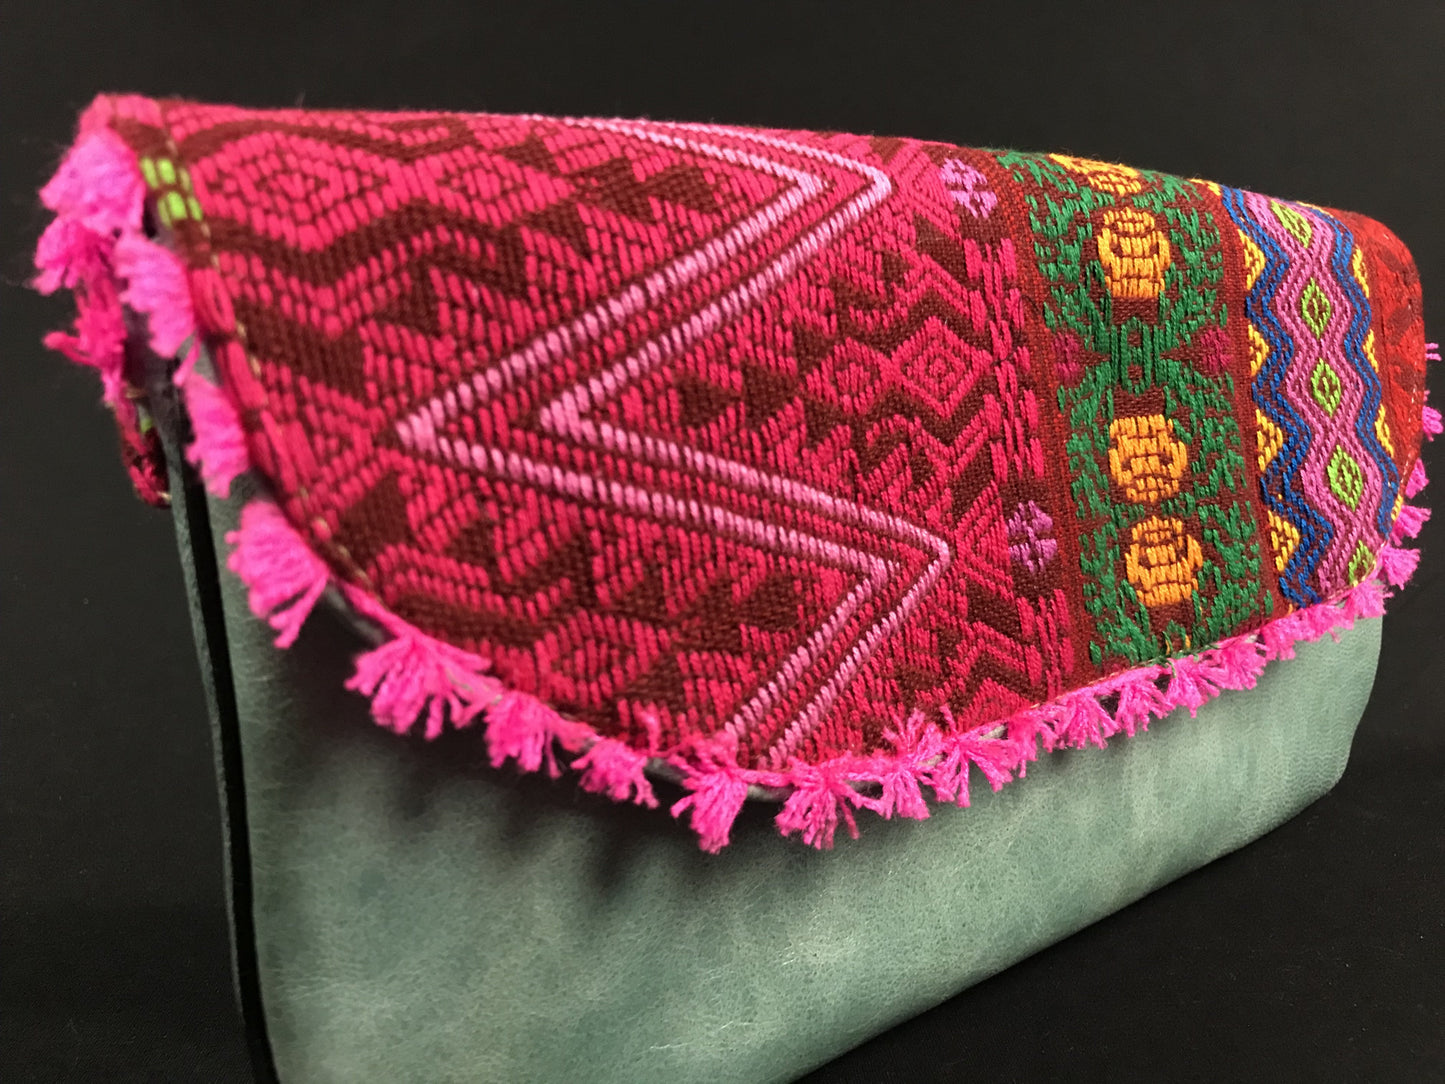 Sayab Maya Embroidered Aqua Leather Wristlet Colores Decor